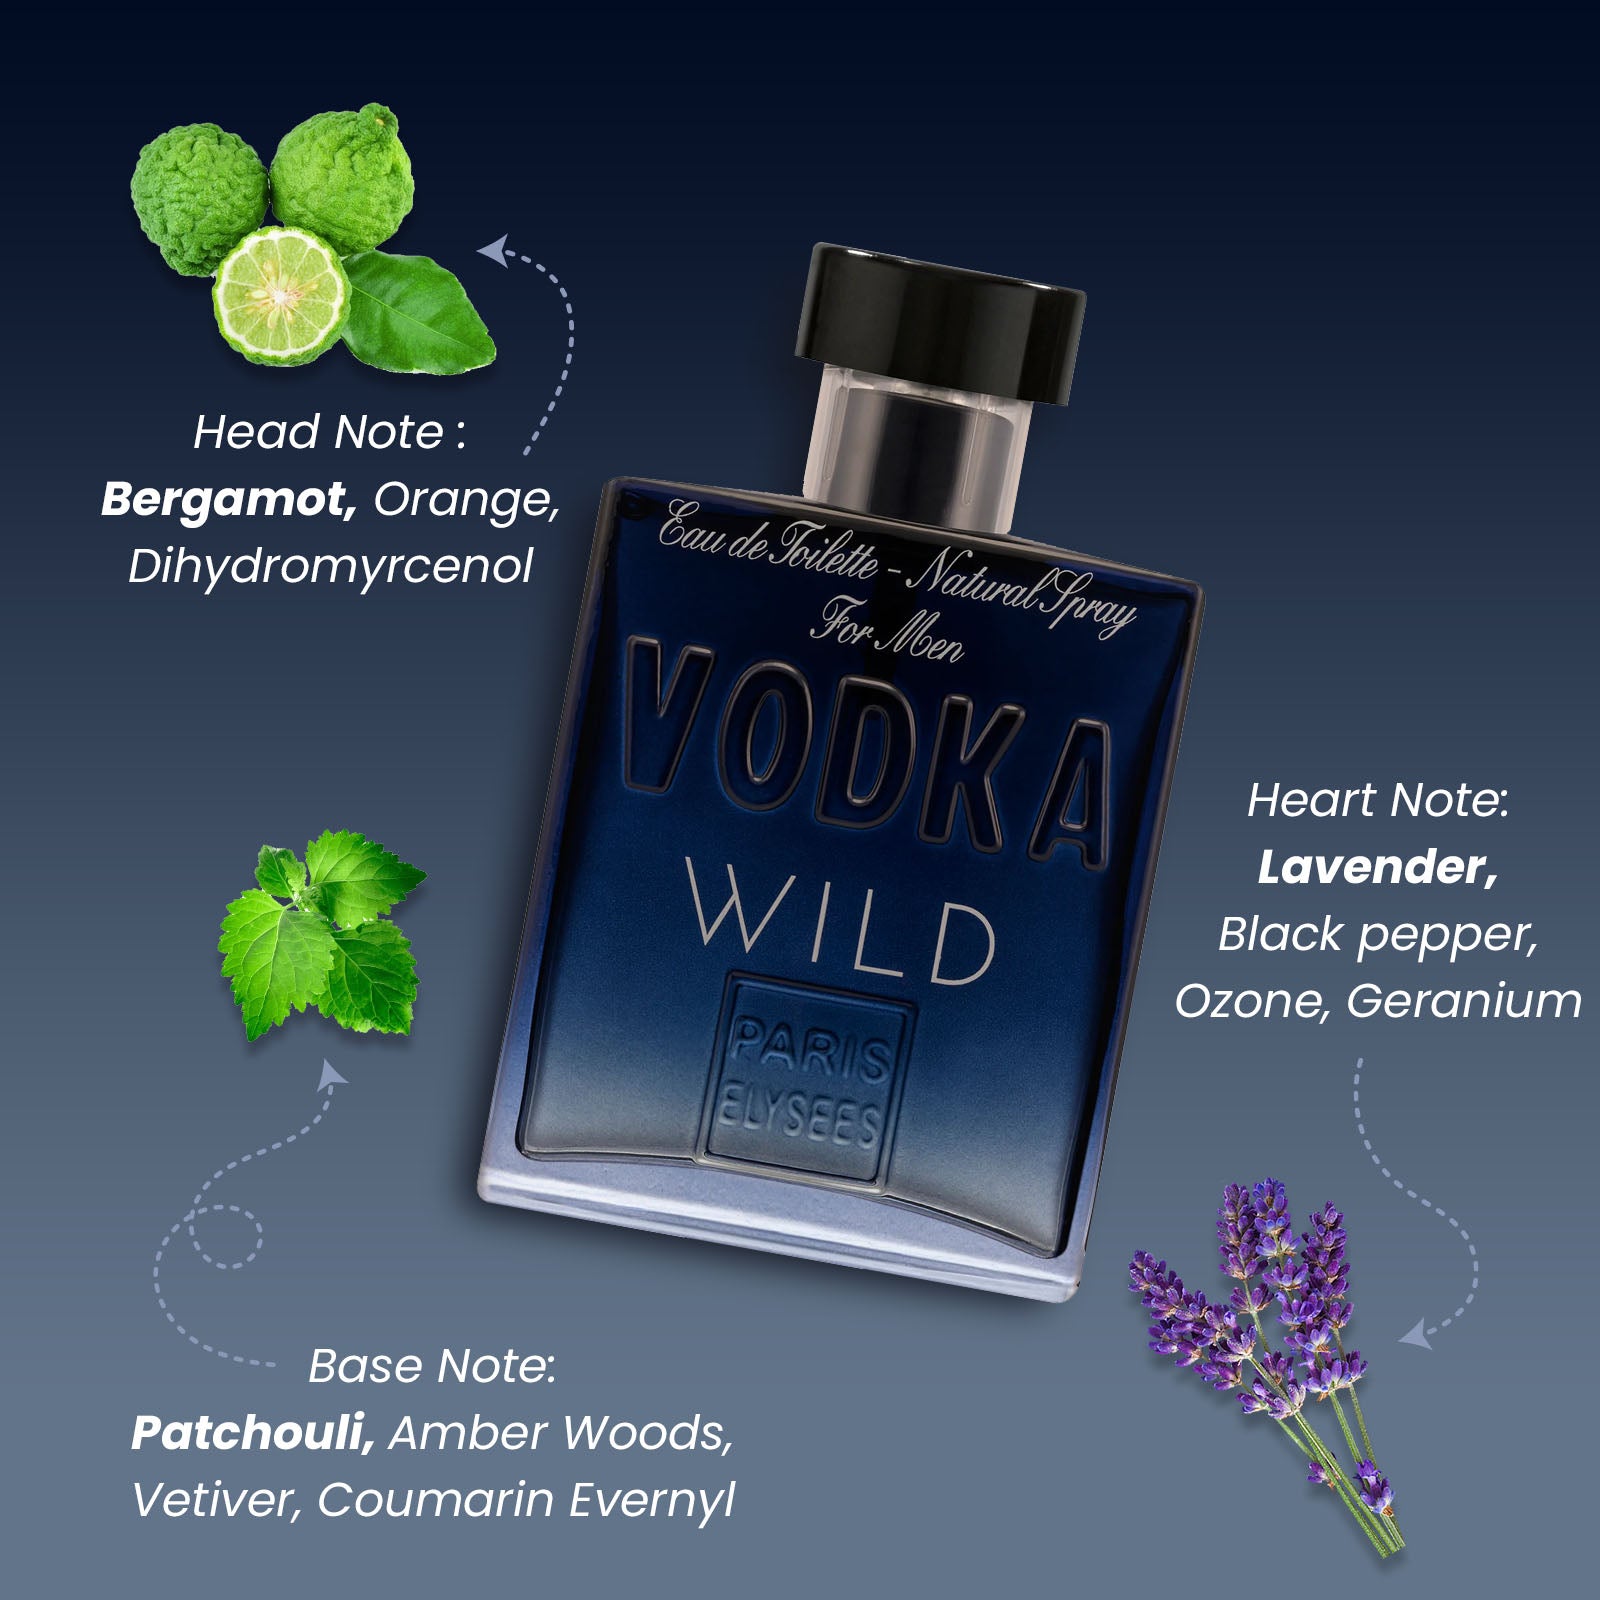 Vodka Wild Perfume For Men 100 ml